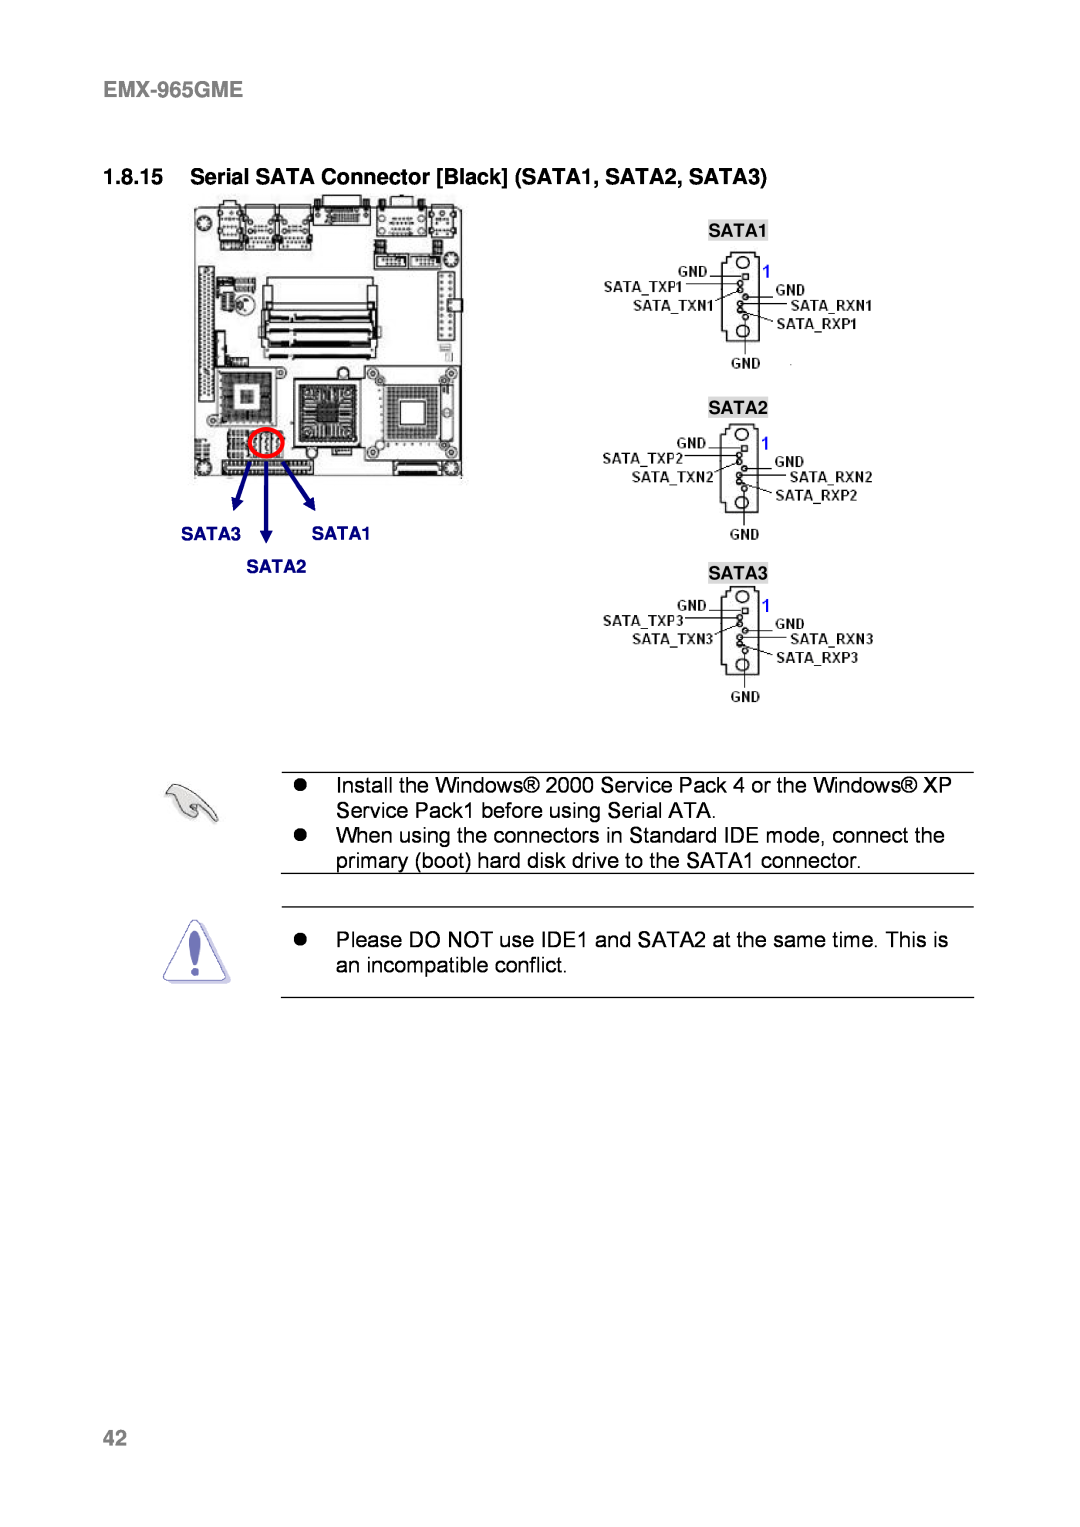 Intel EMX-965GME user manual SATA1 SATA2 